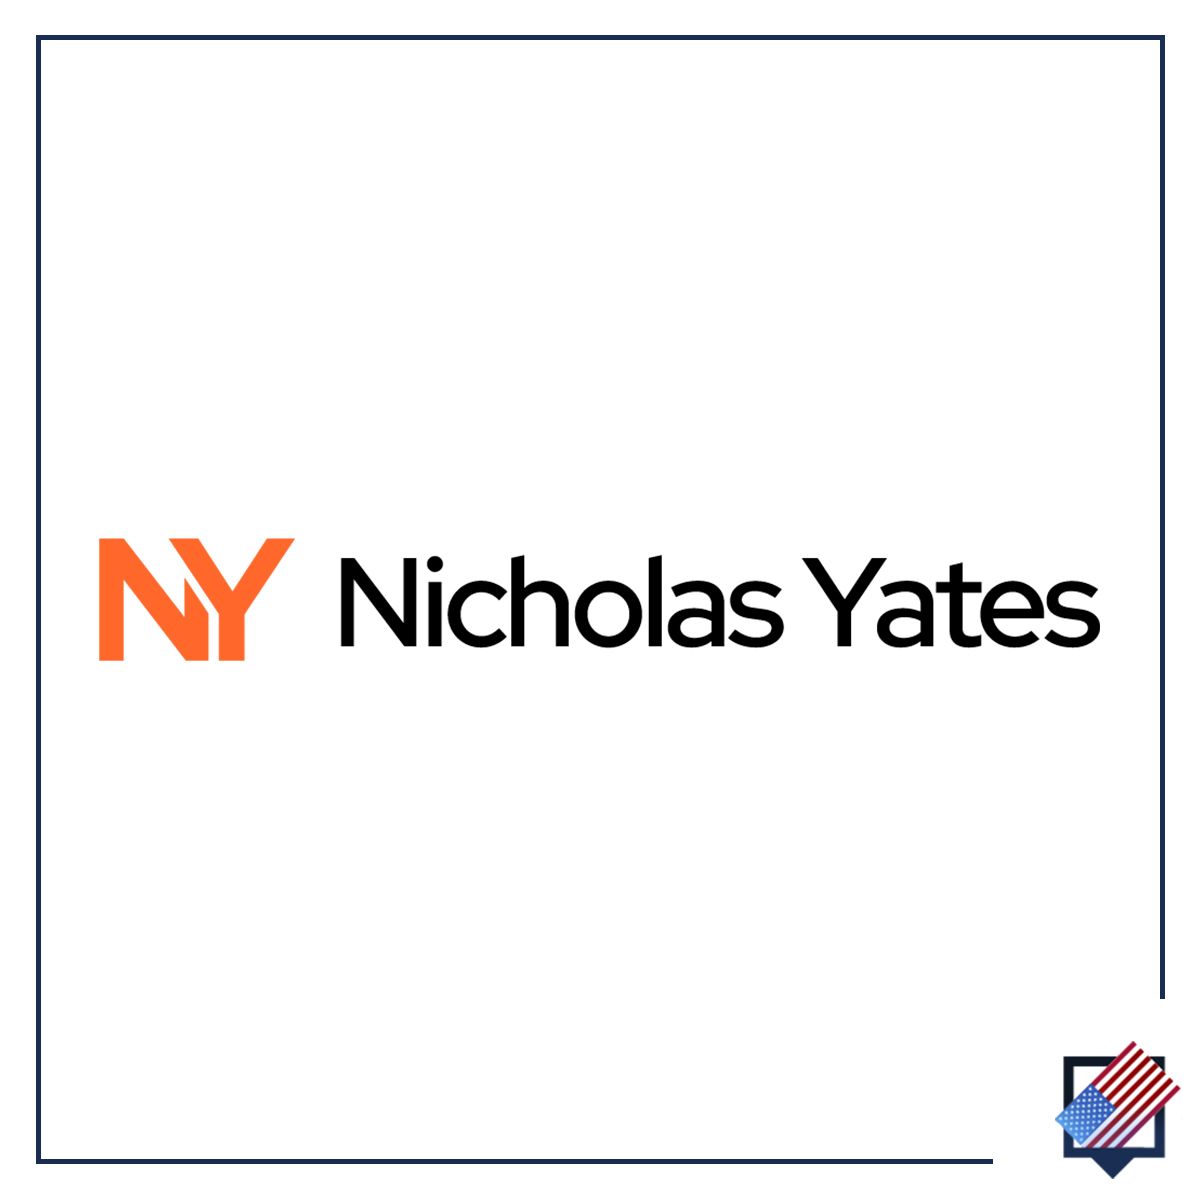 Nicholas Yates